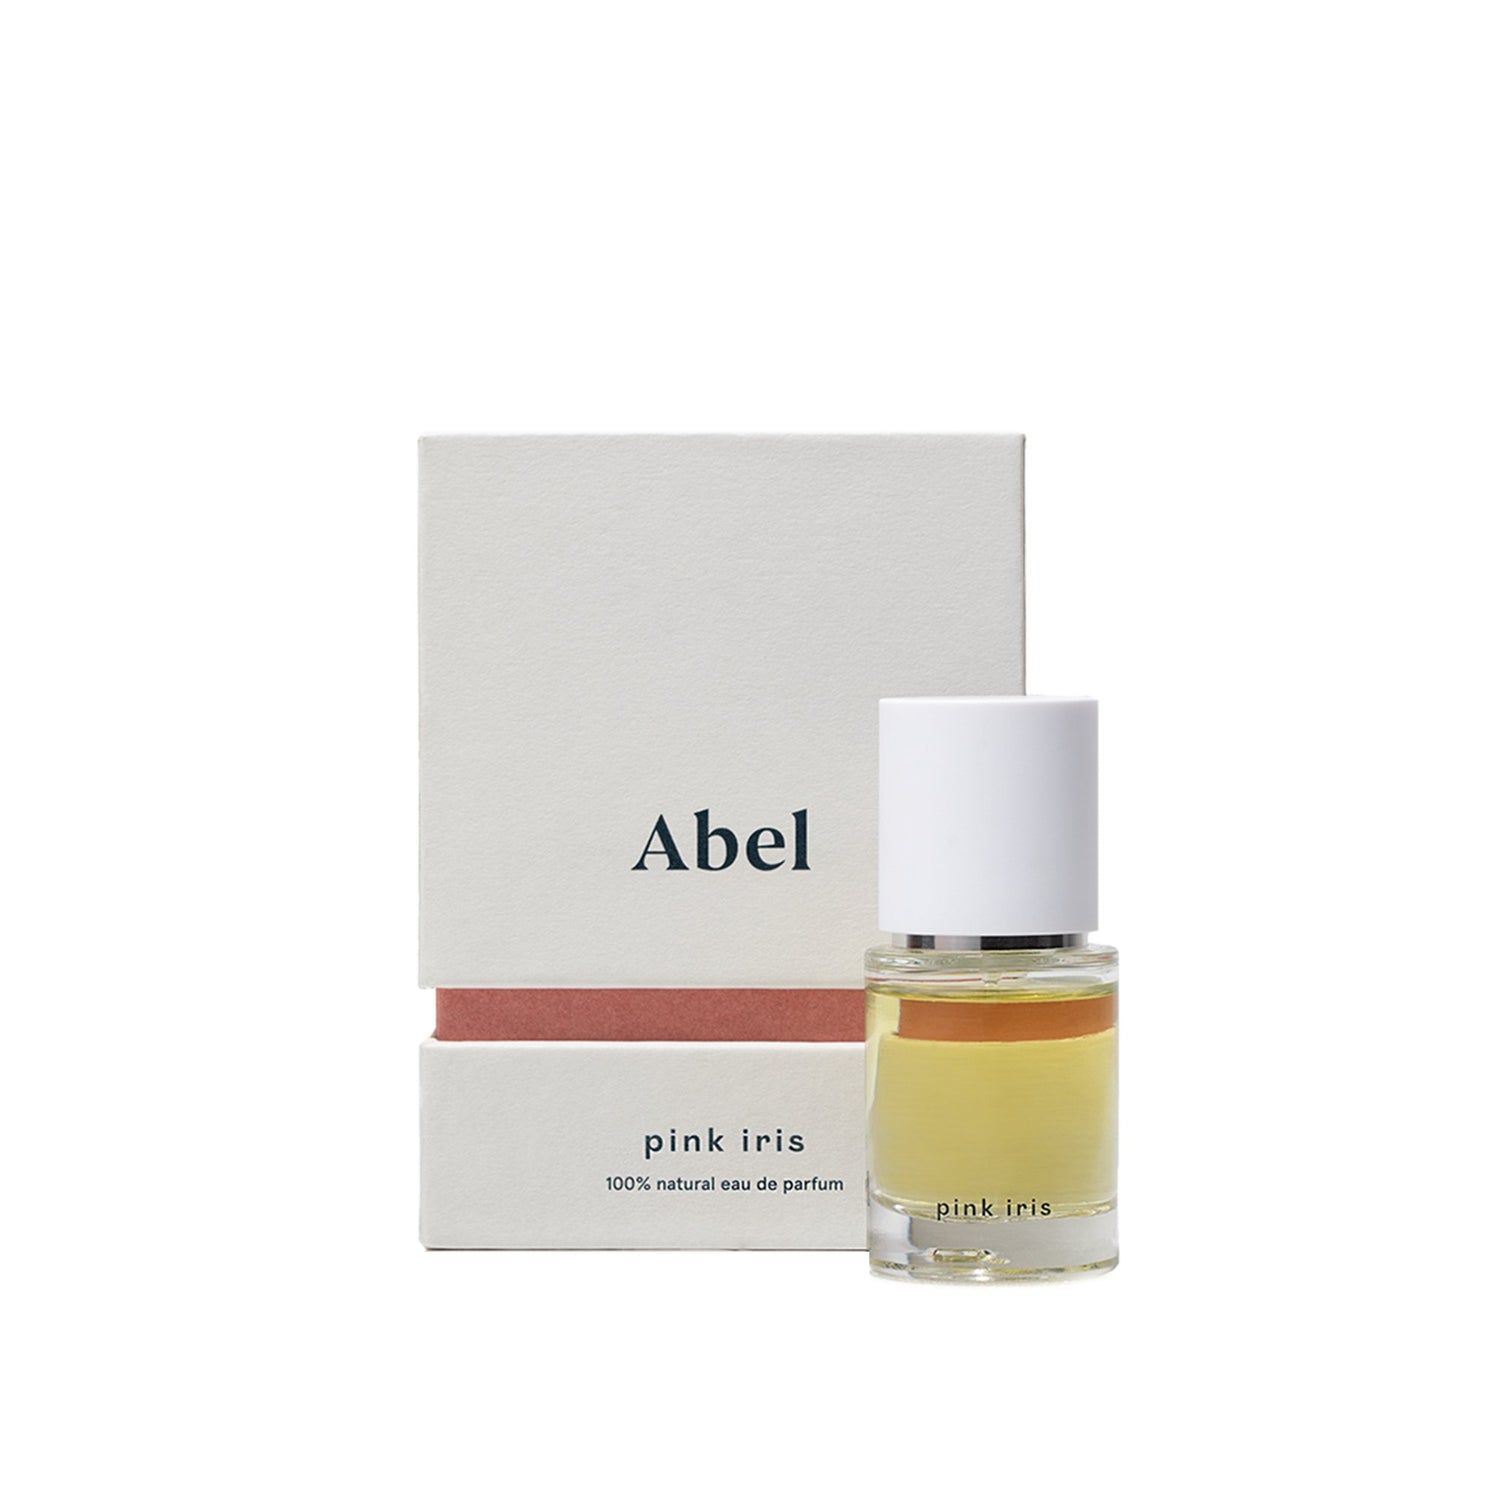 Abel - Pink Iris Eau de Parfum - The Flower Crate